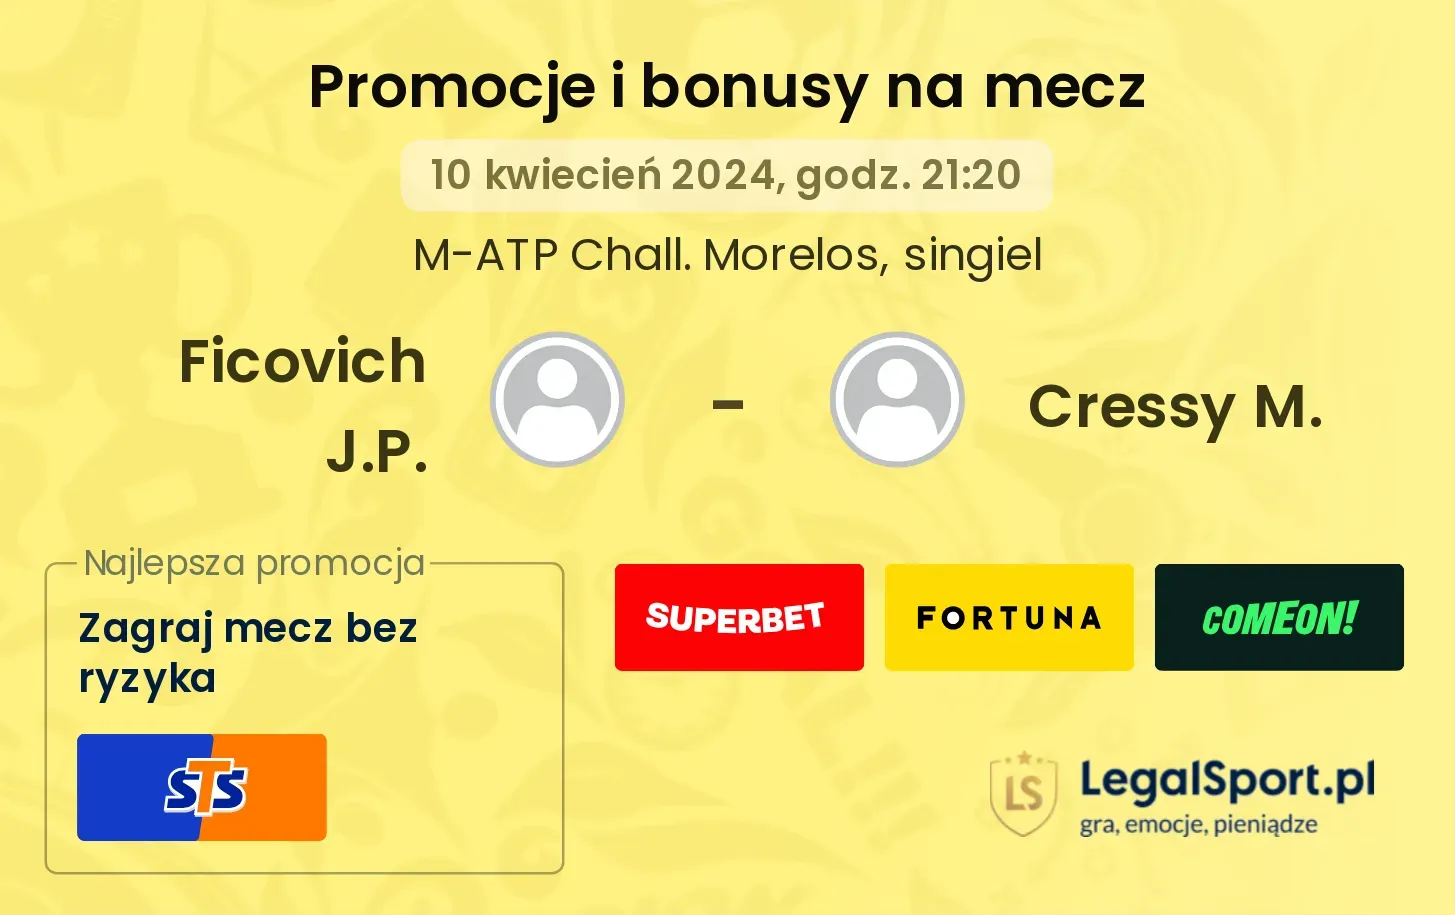 Ficovich J.P. - Cressy M. promocje bonusy na mecz